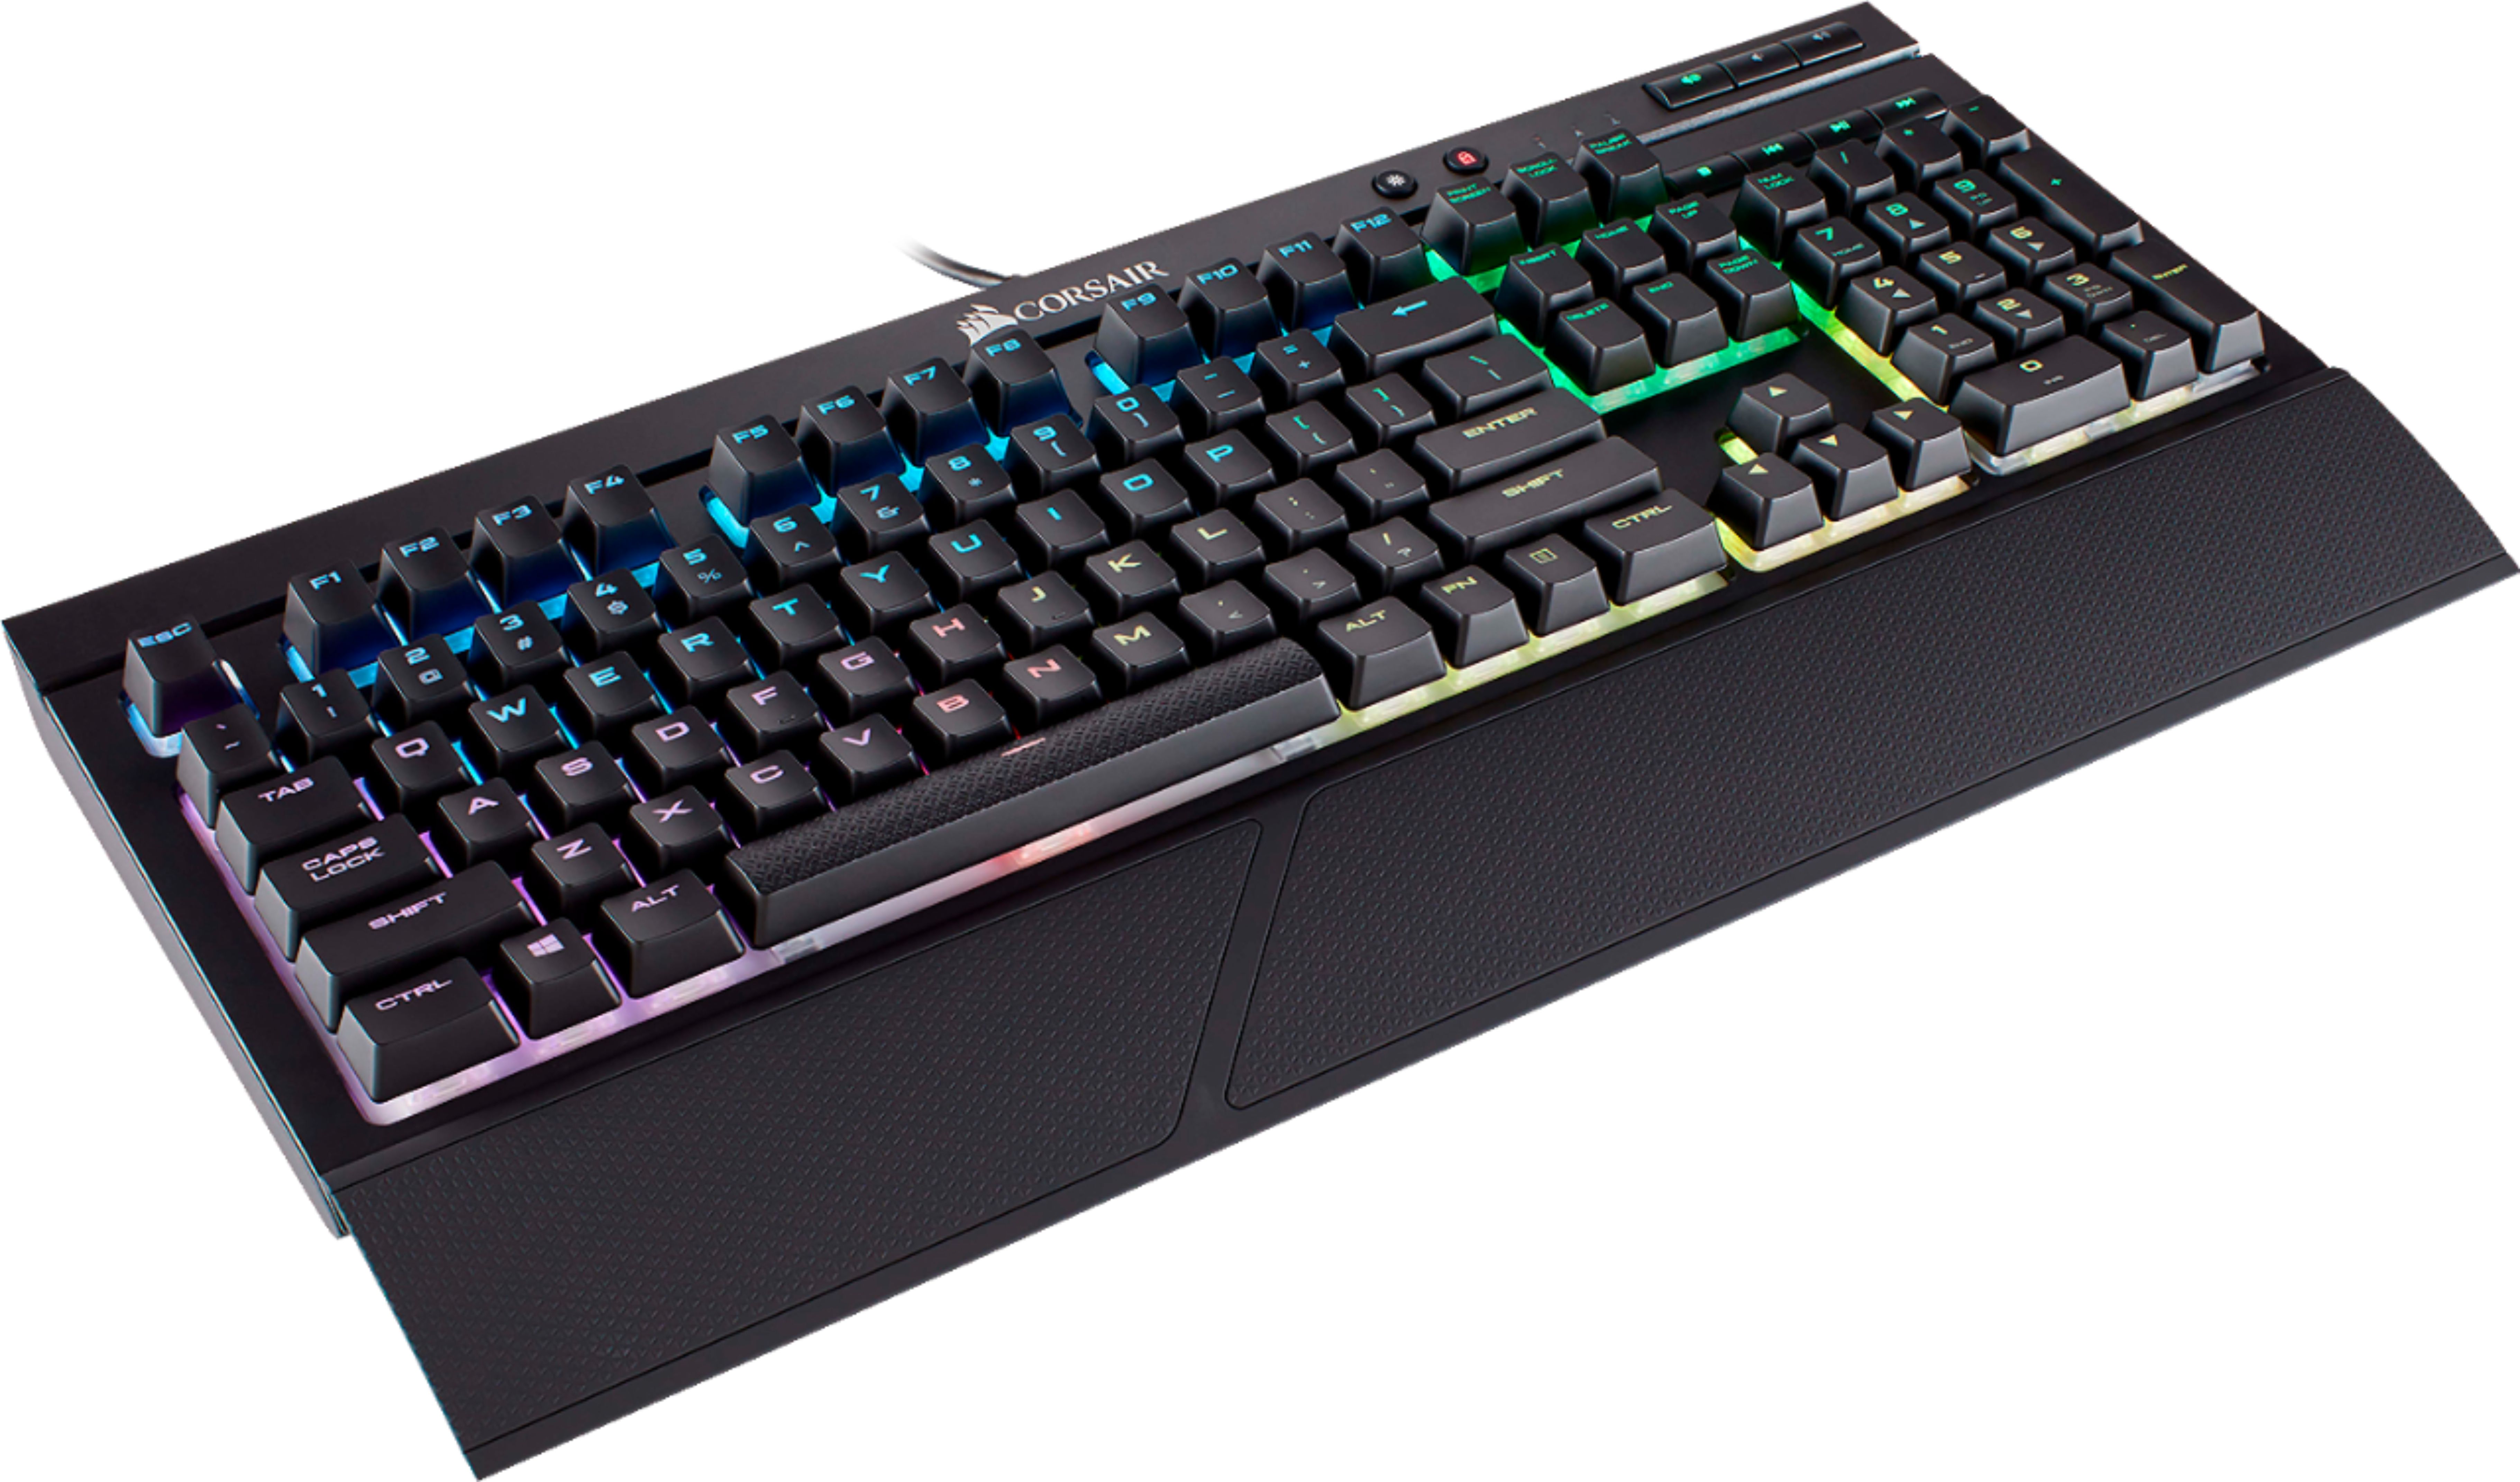 【69%OFF!】 Corsair K68 RGB Mechanical Gaming Keyboard Backlit RGB LED ...